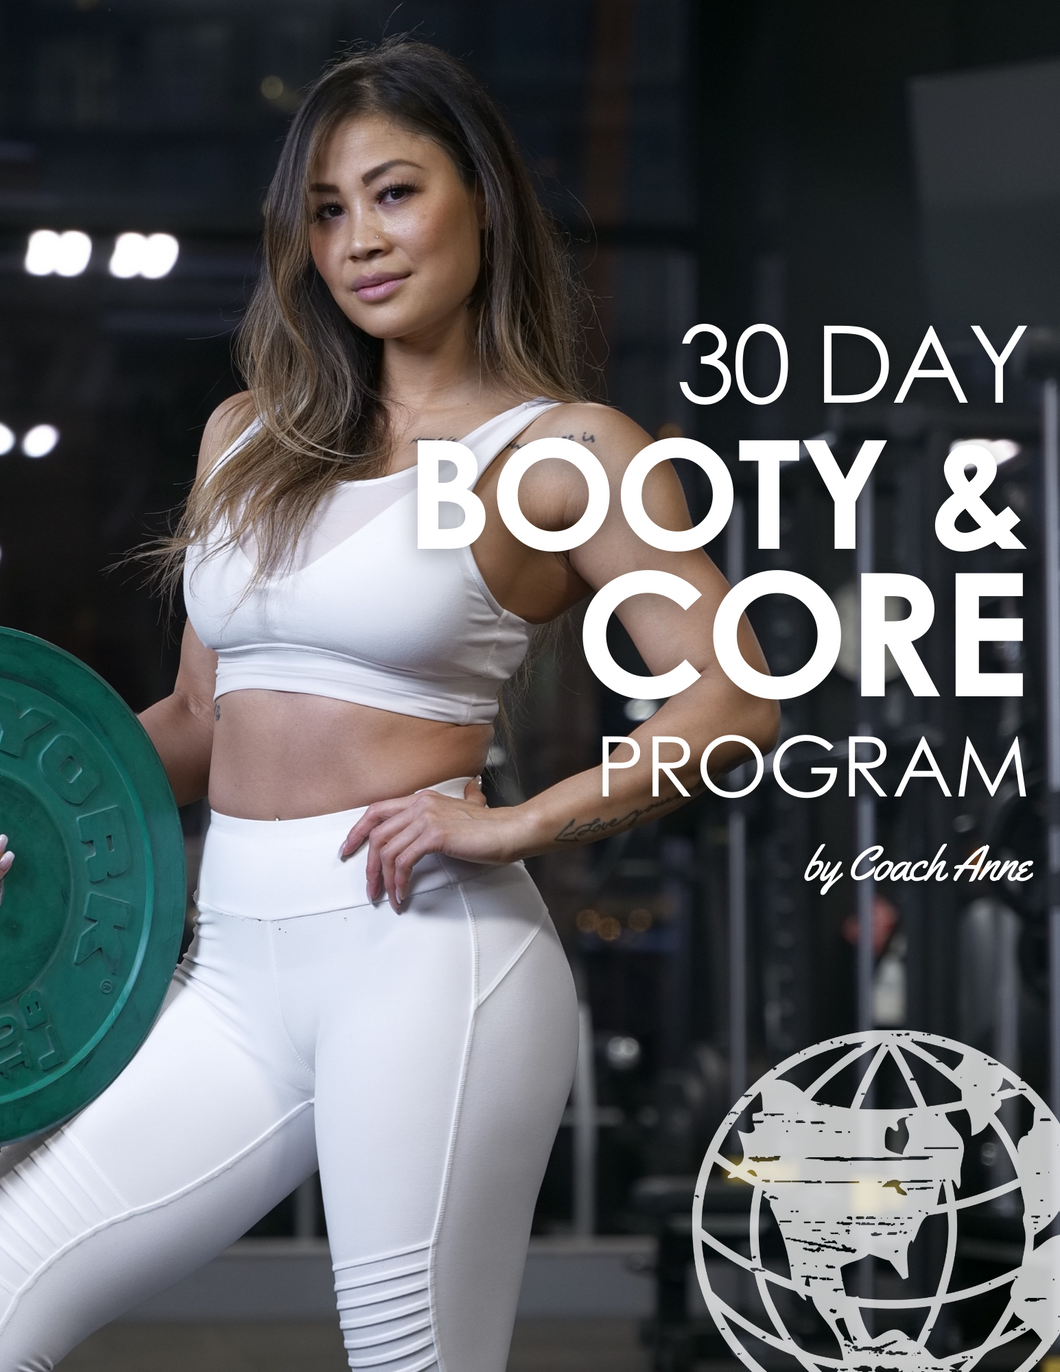 30 Day Booty & Core Program